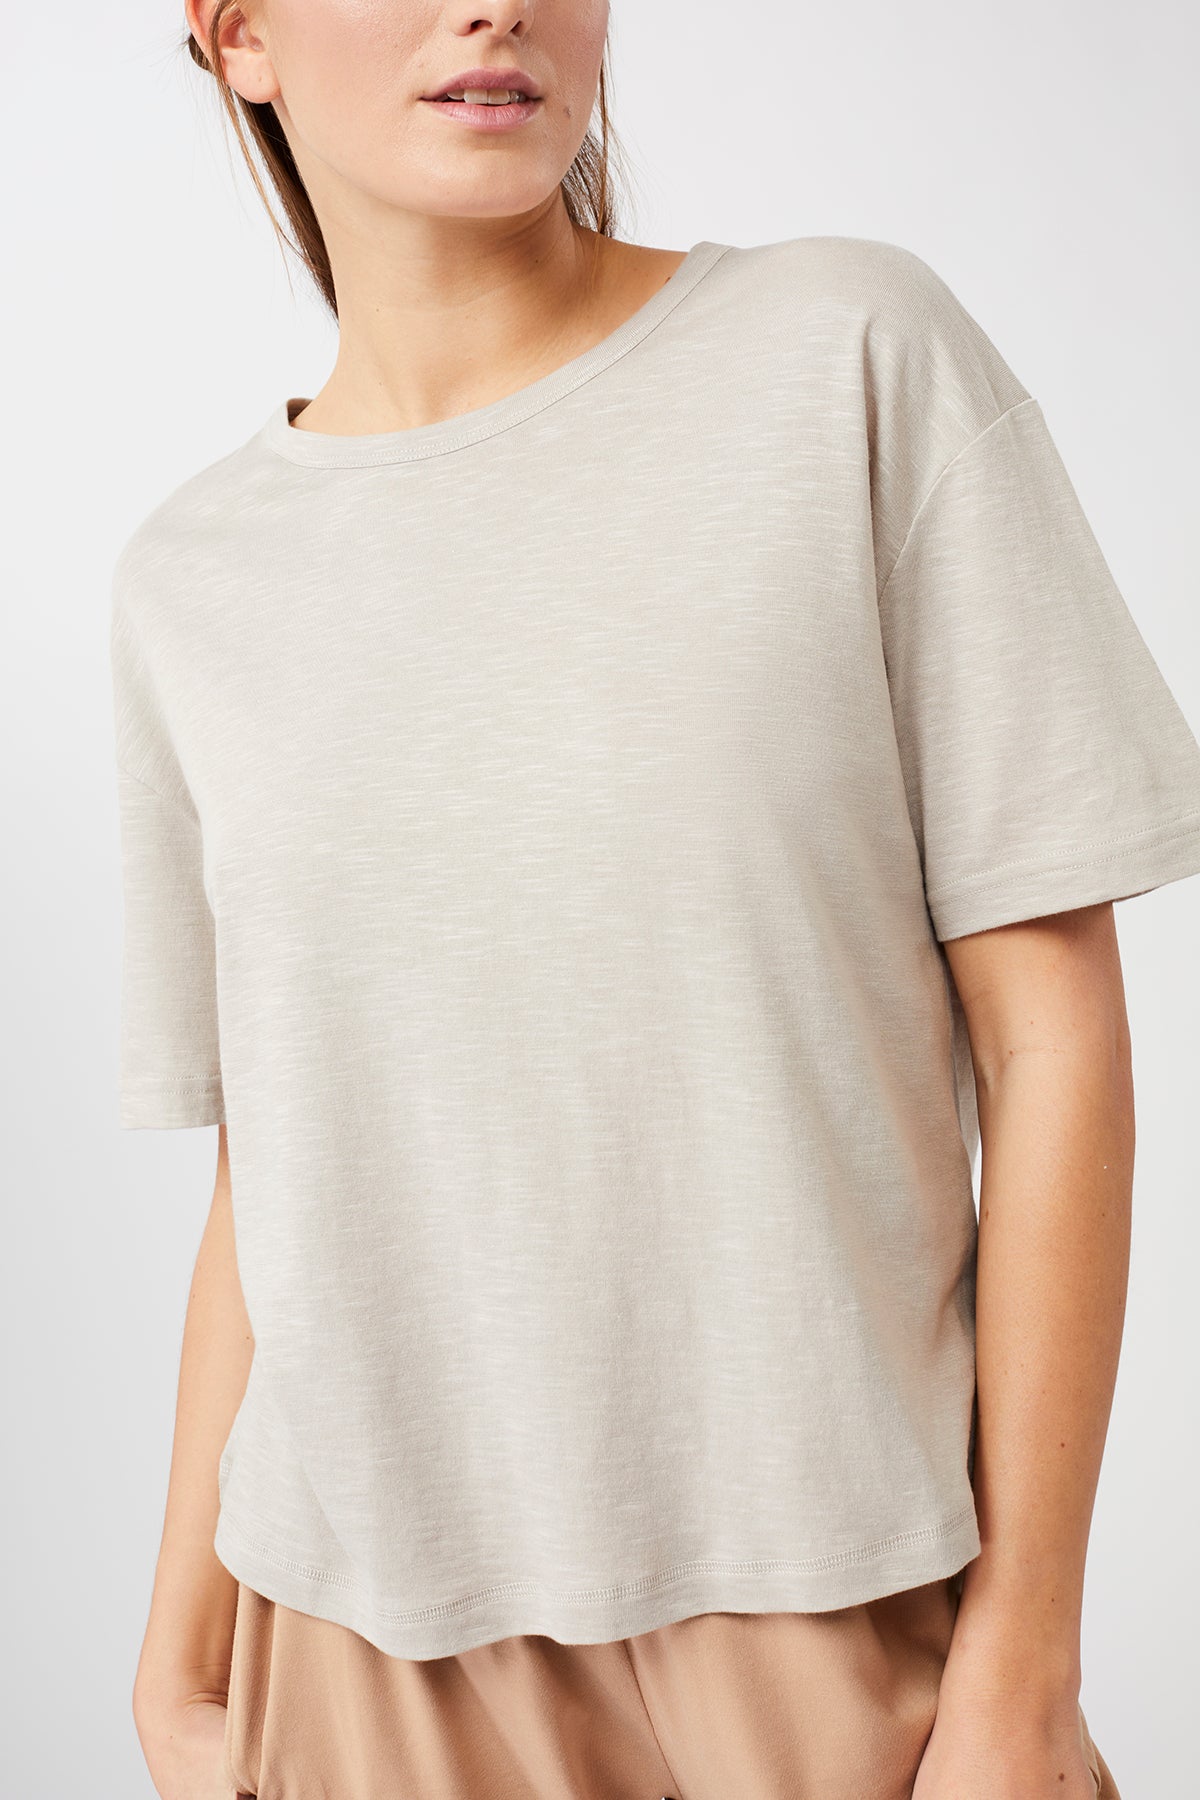 Mandala Yoga Shirt Beige Detail - Boxy T-Shirt